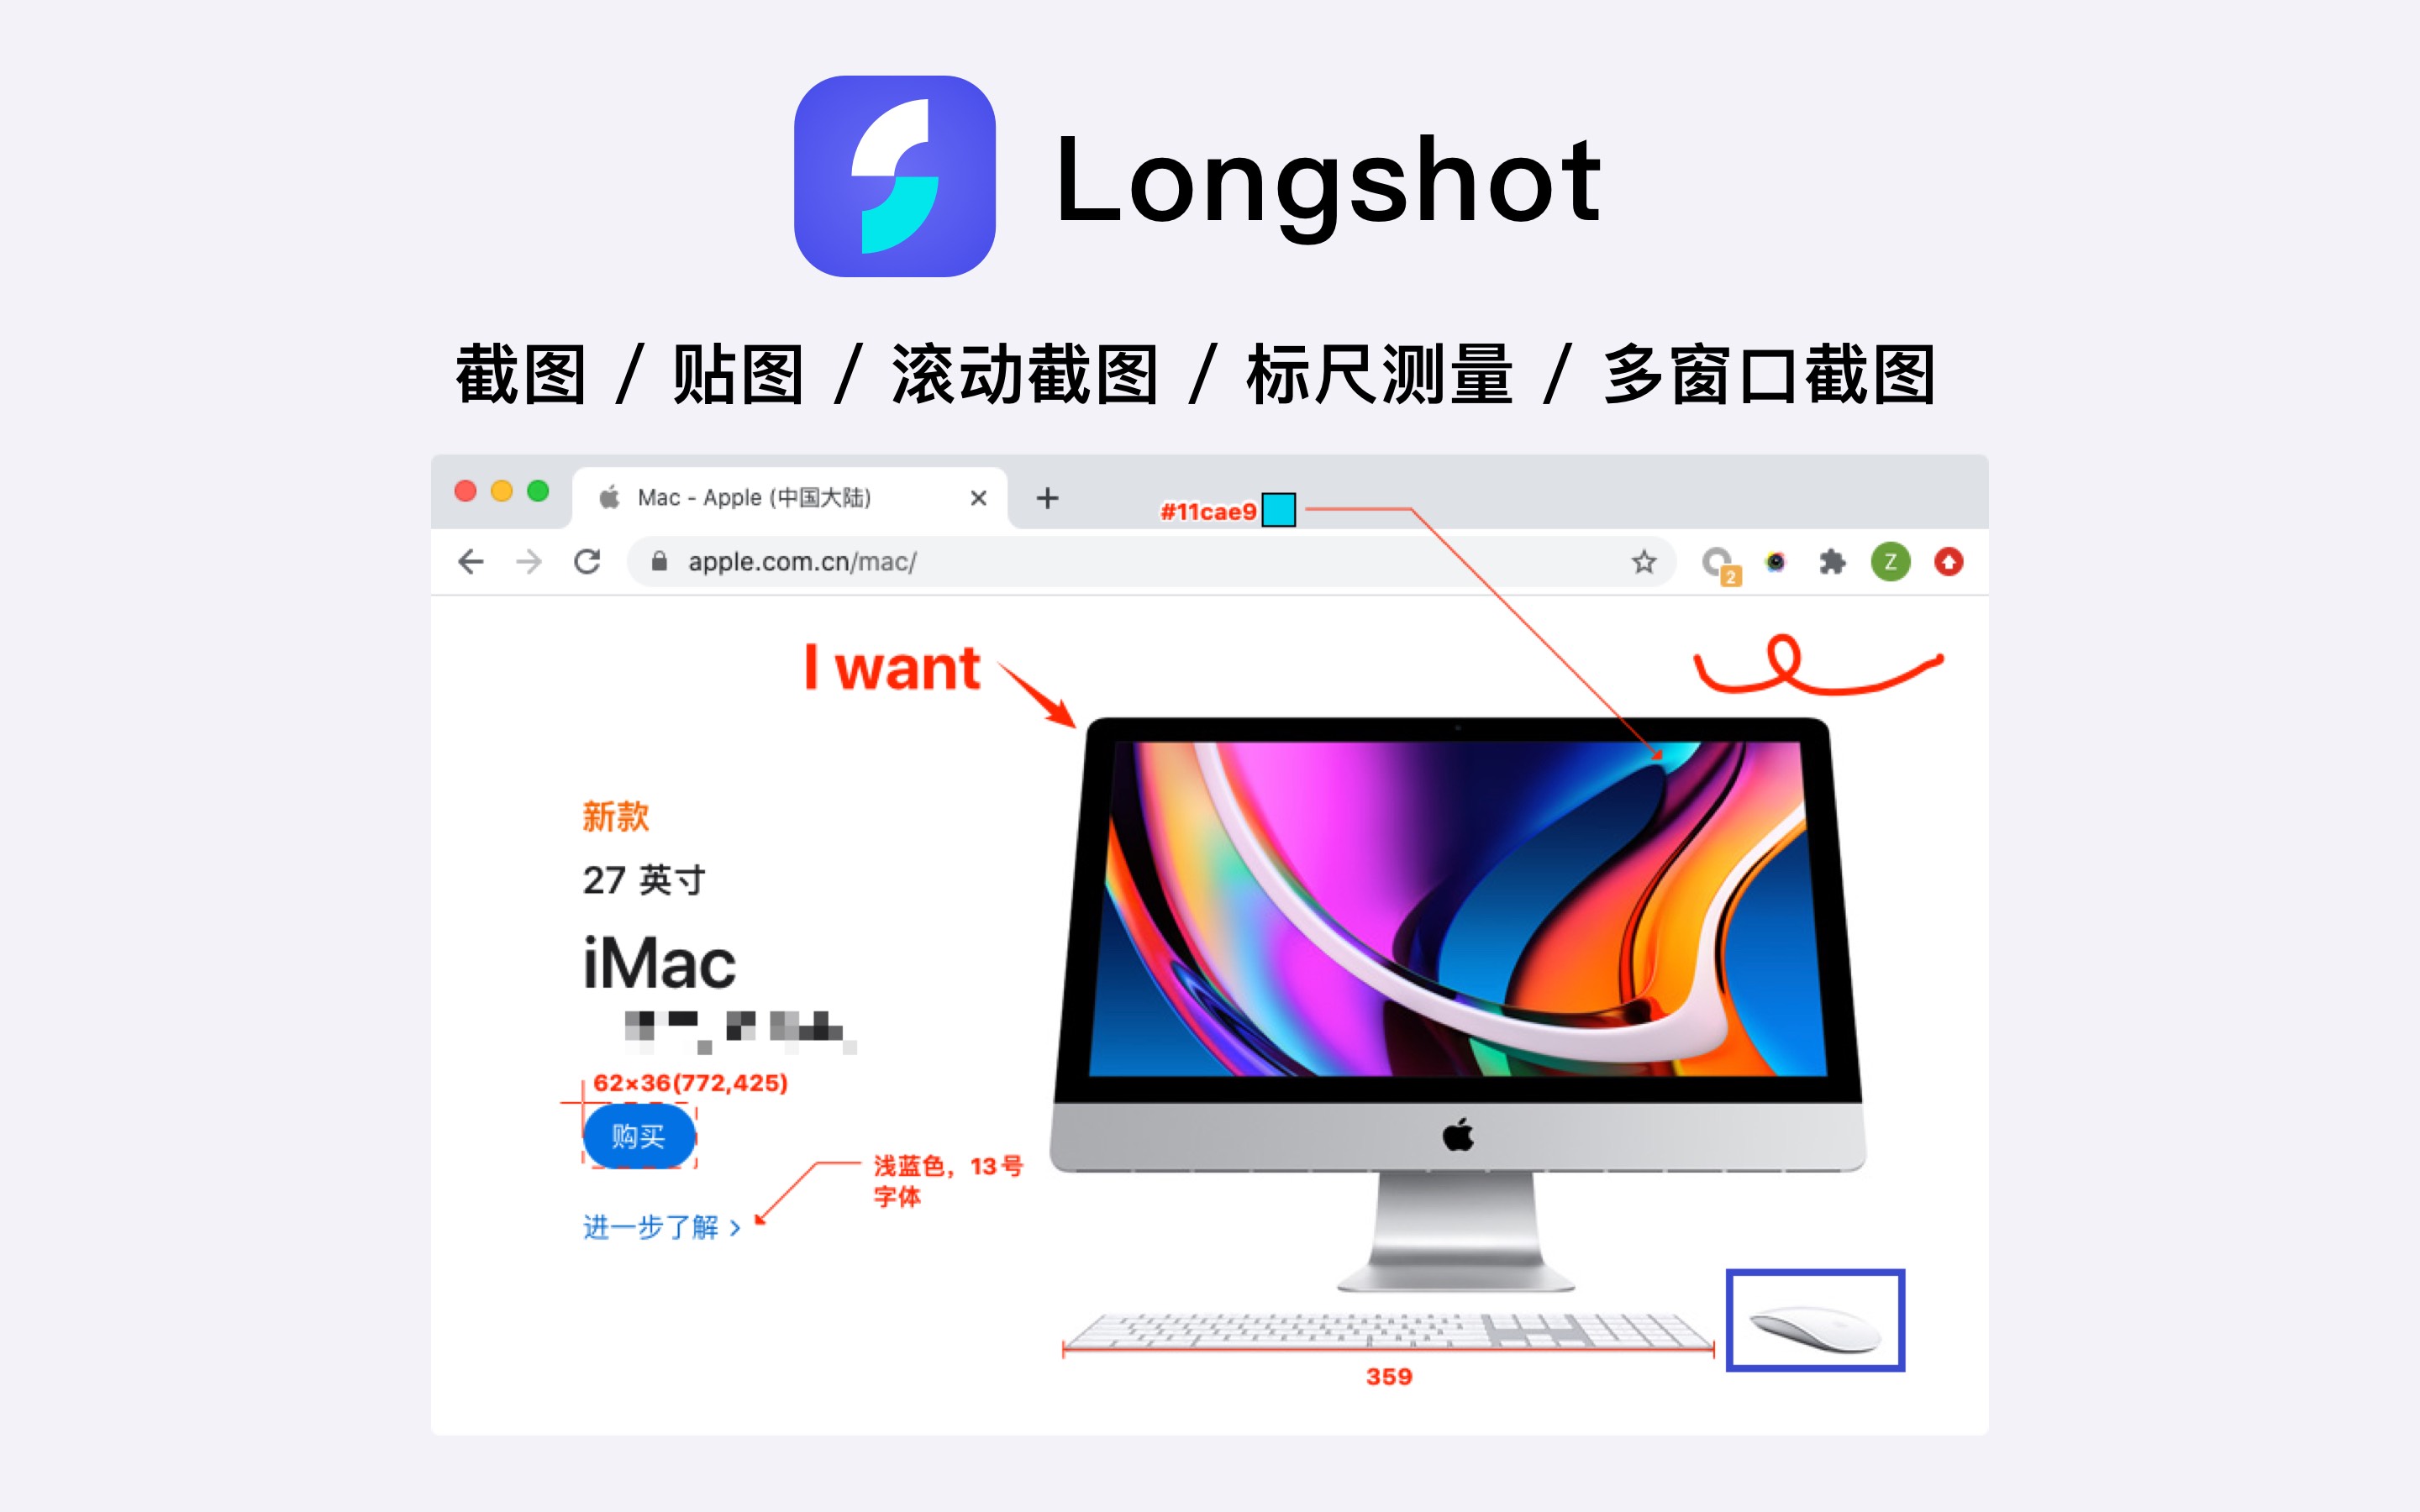 Longshot - 截图 & 贴图 1.0.6 好用的截图工具